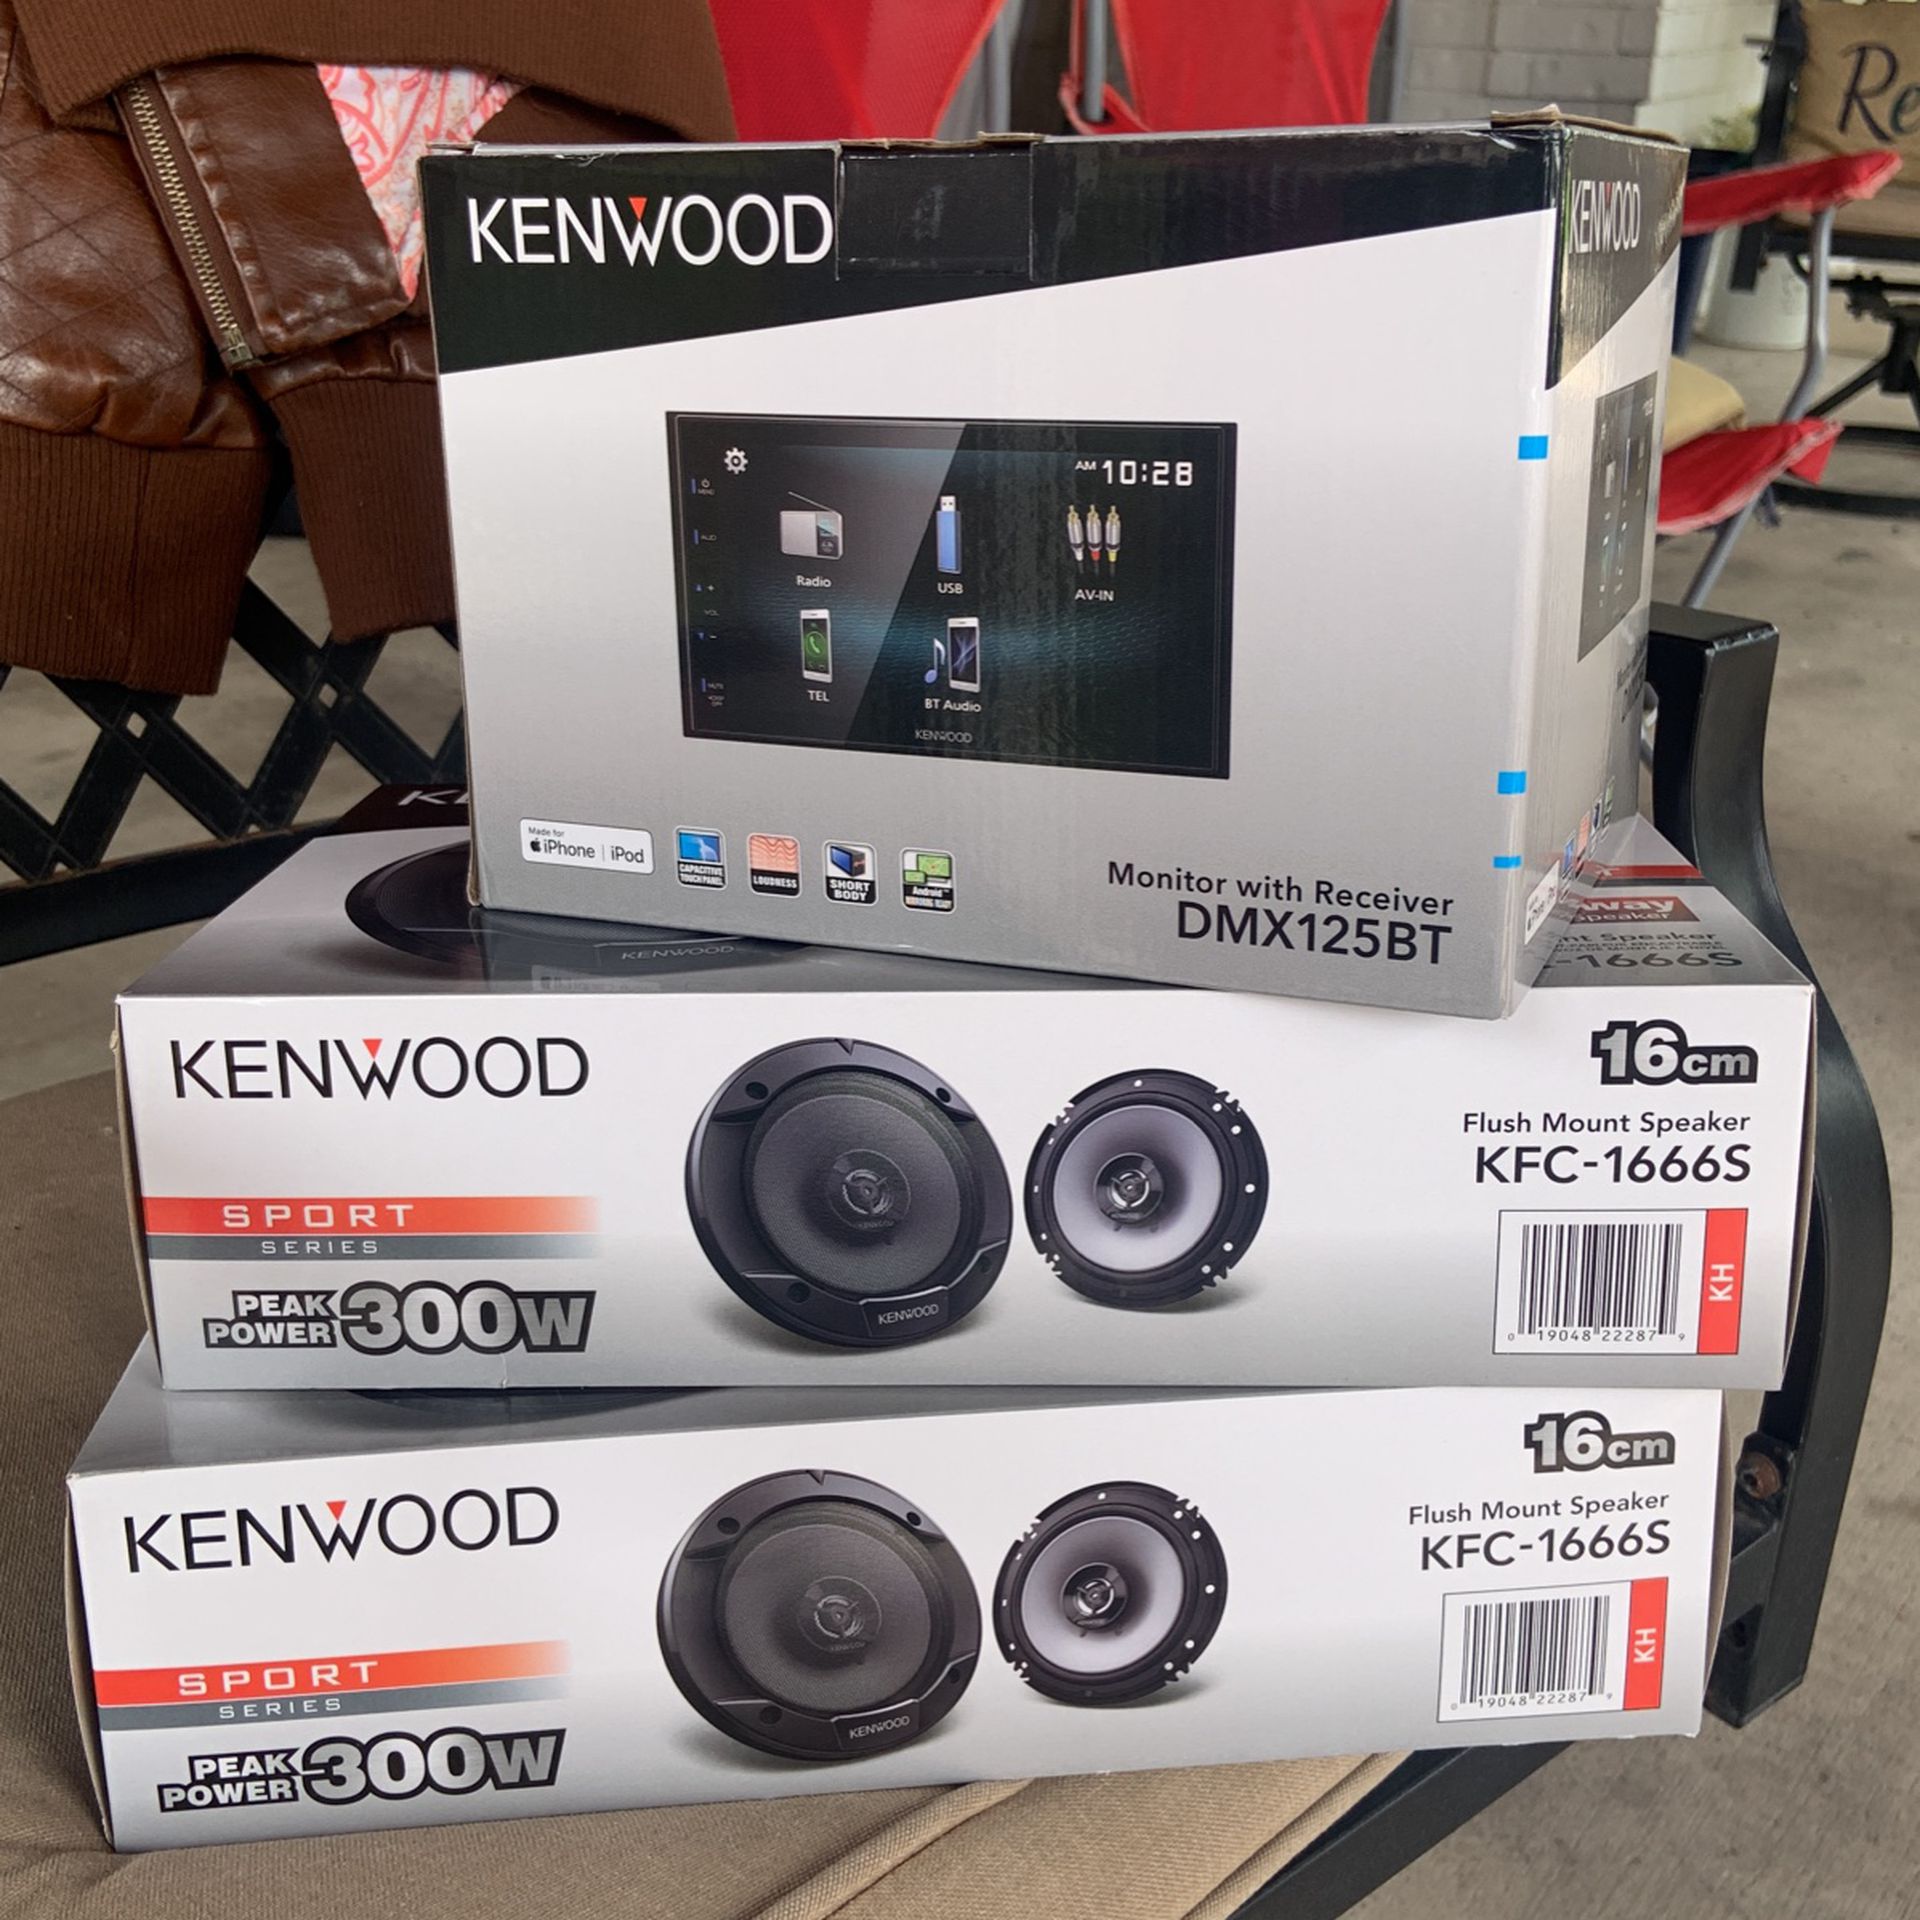 Kenwood Sport Series with Flush mount speaker